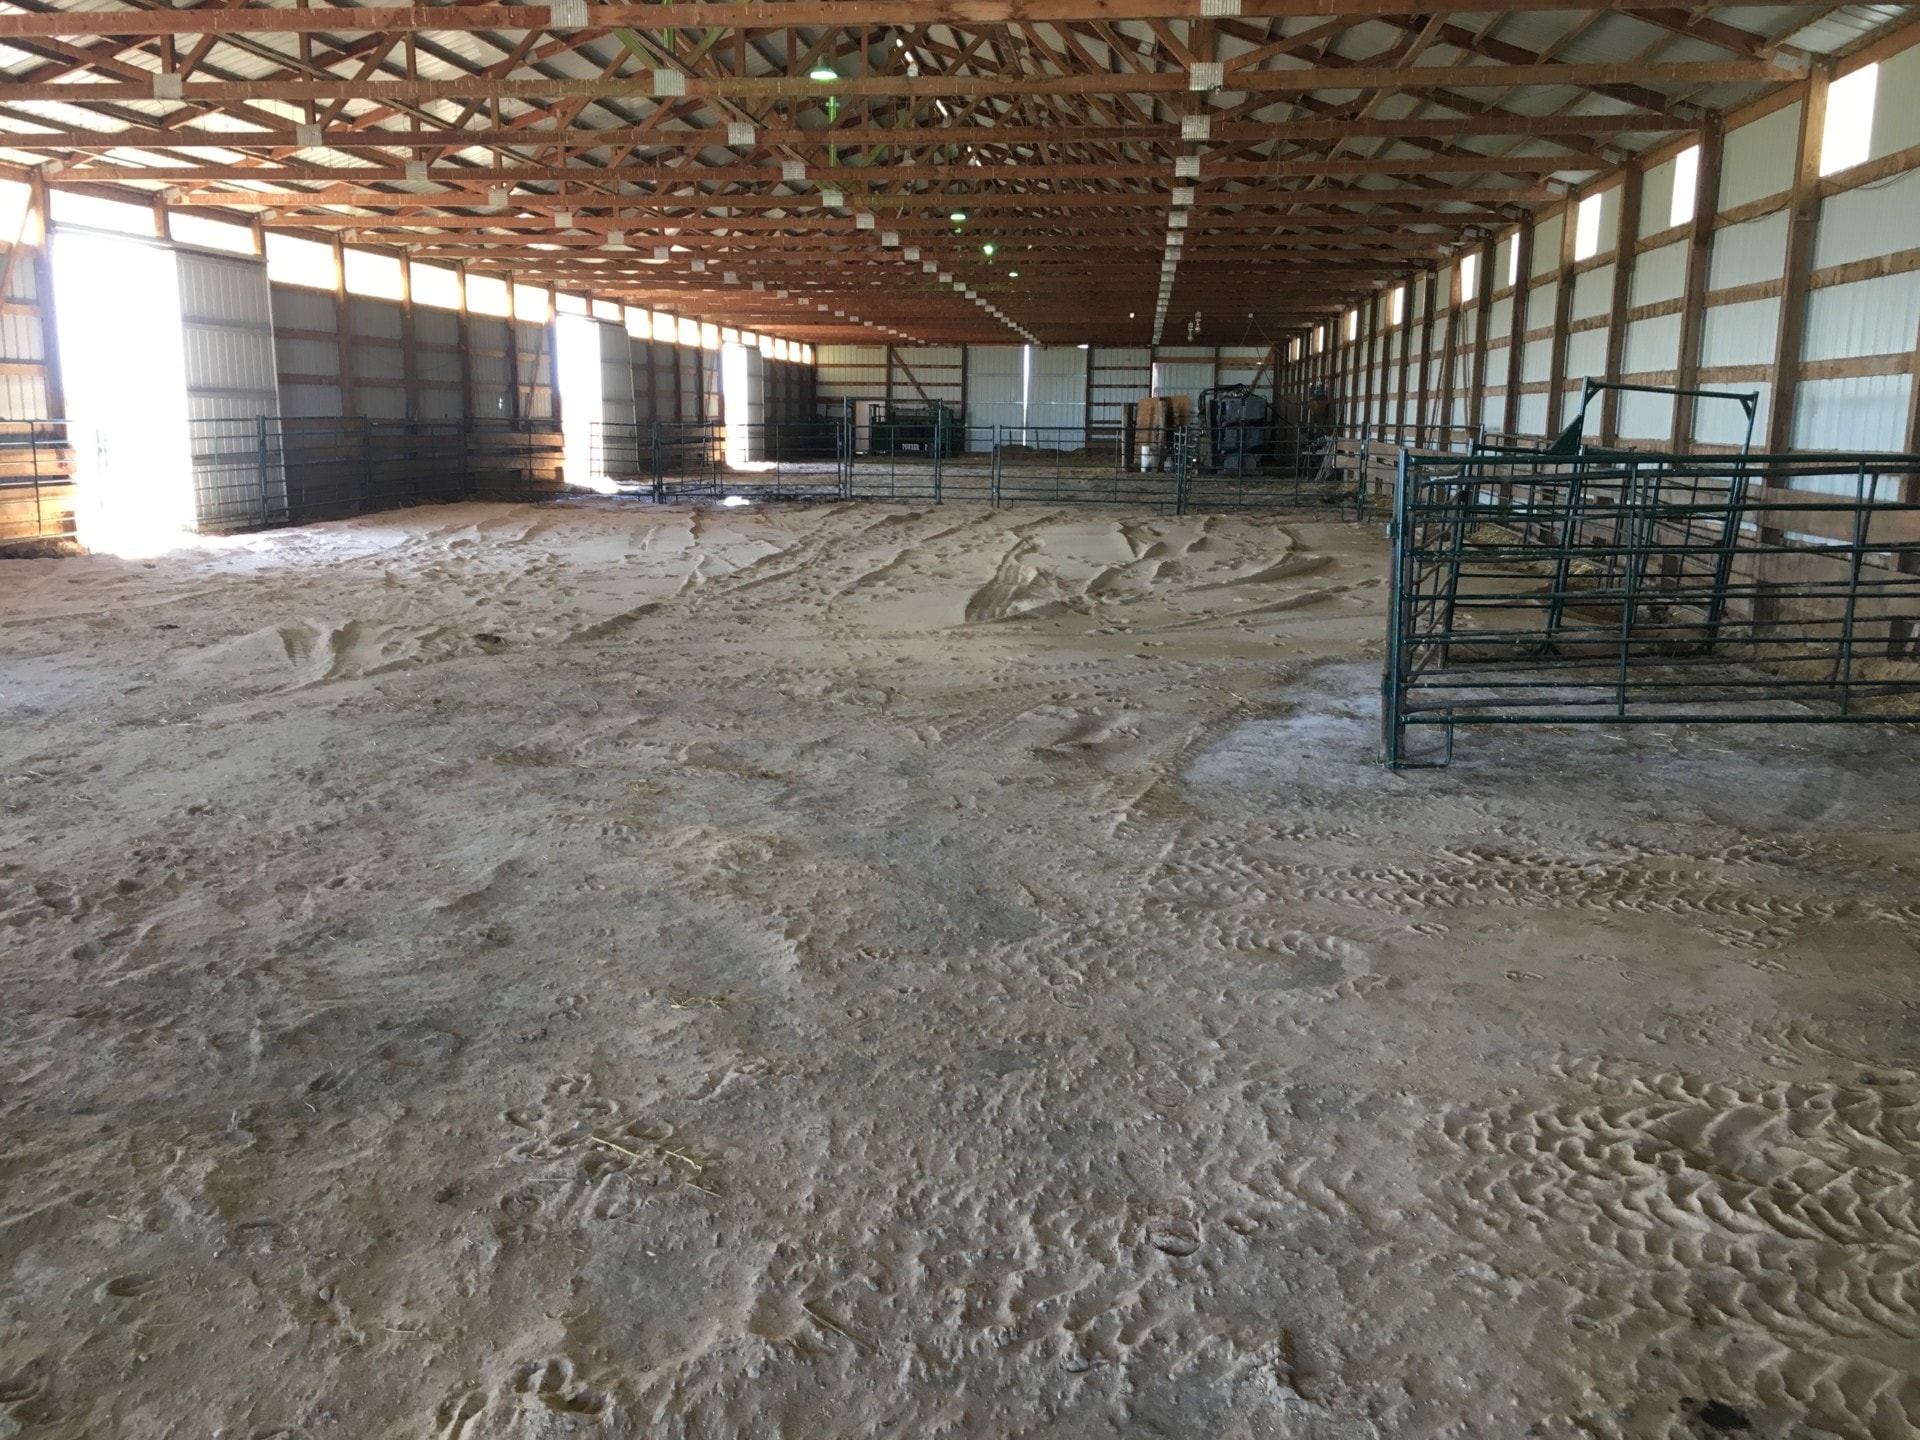 indoor arena south dakota northern plains grassland cattle ranch